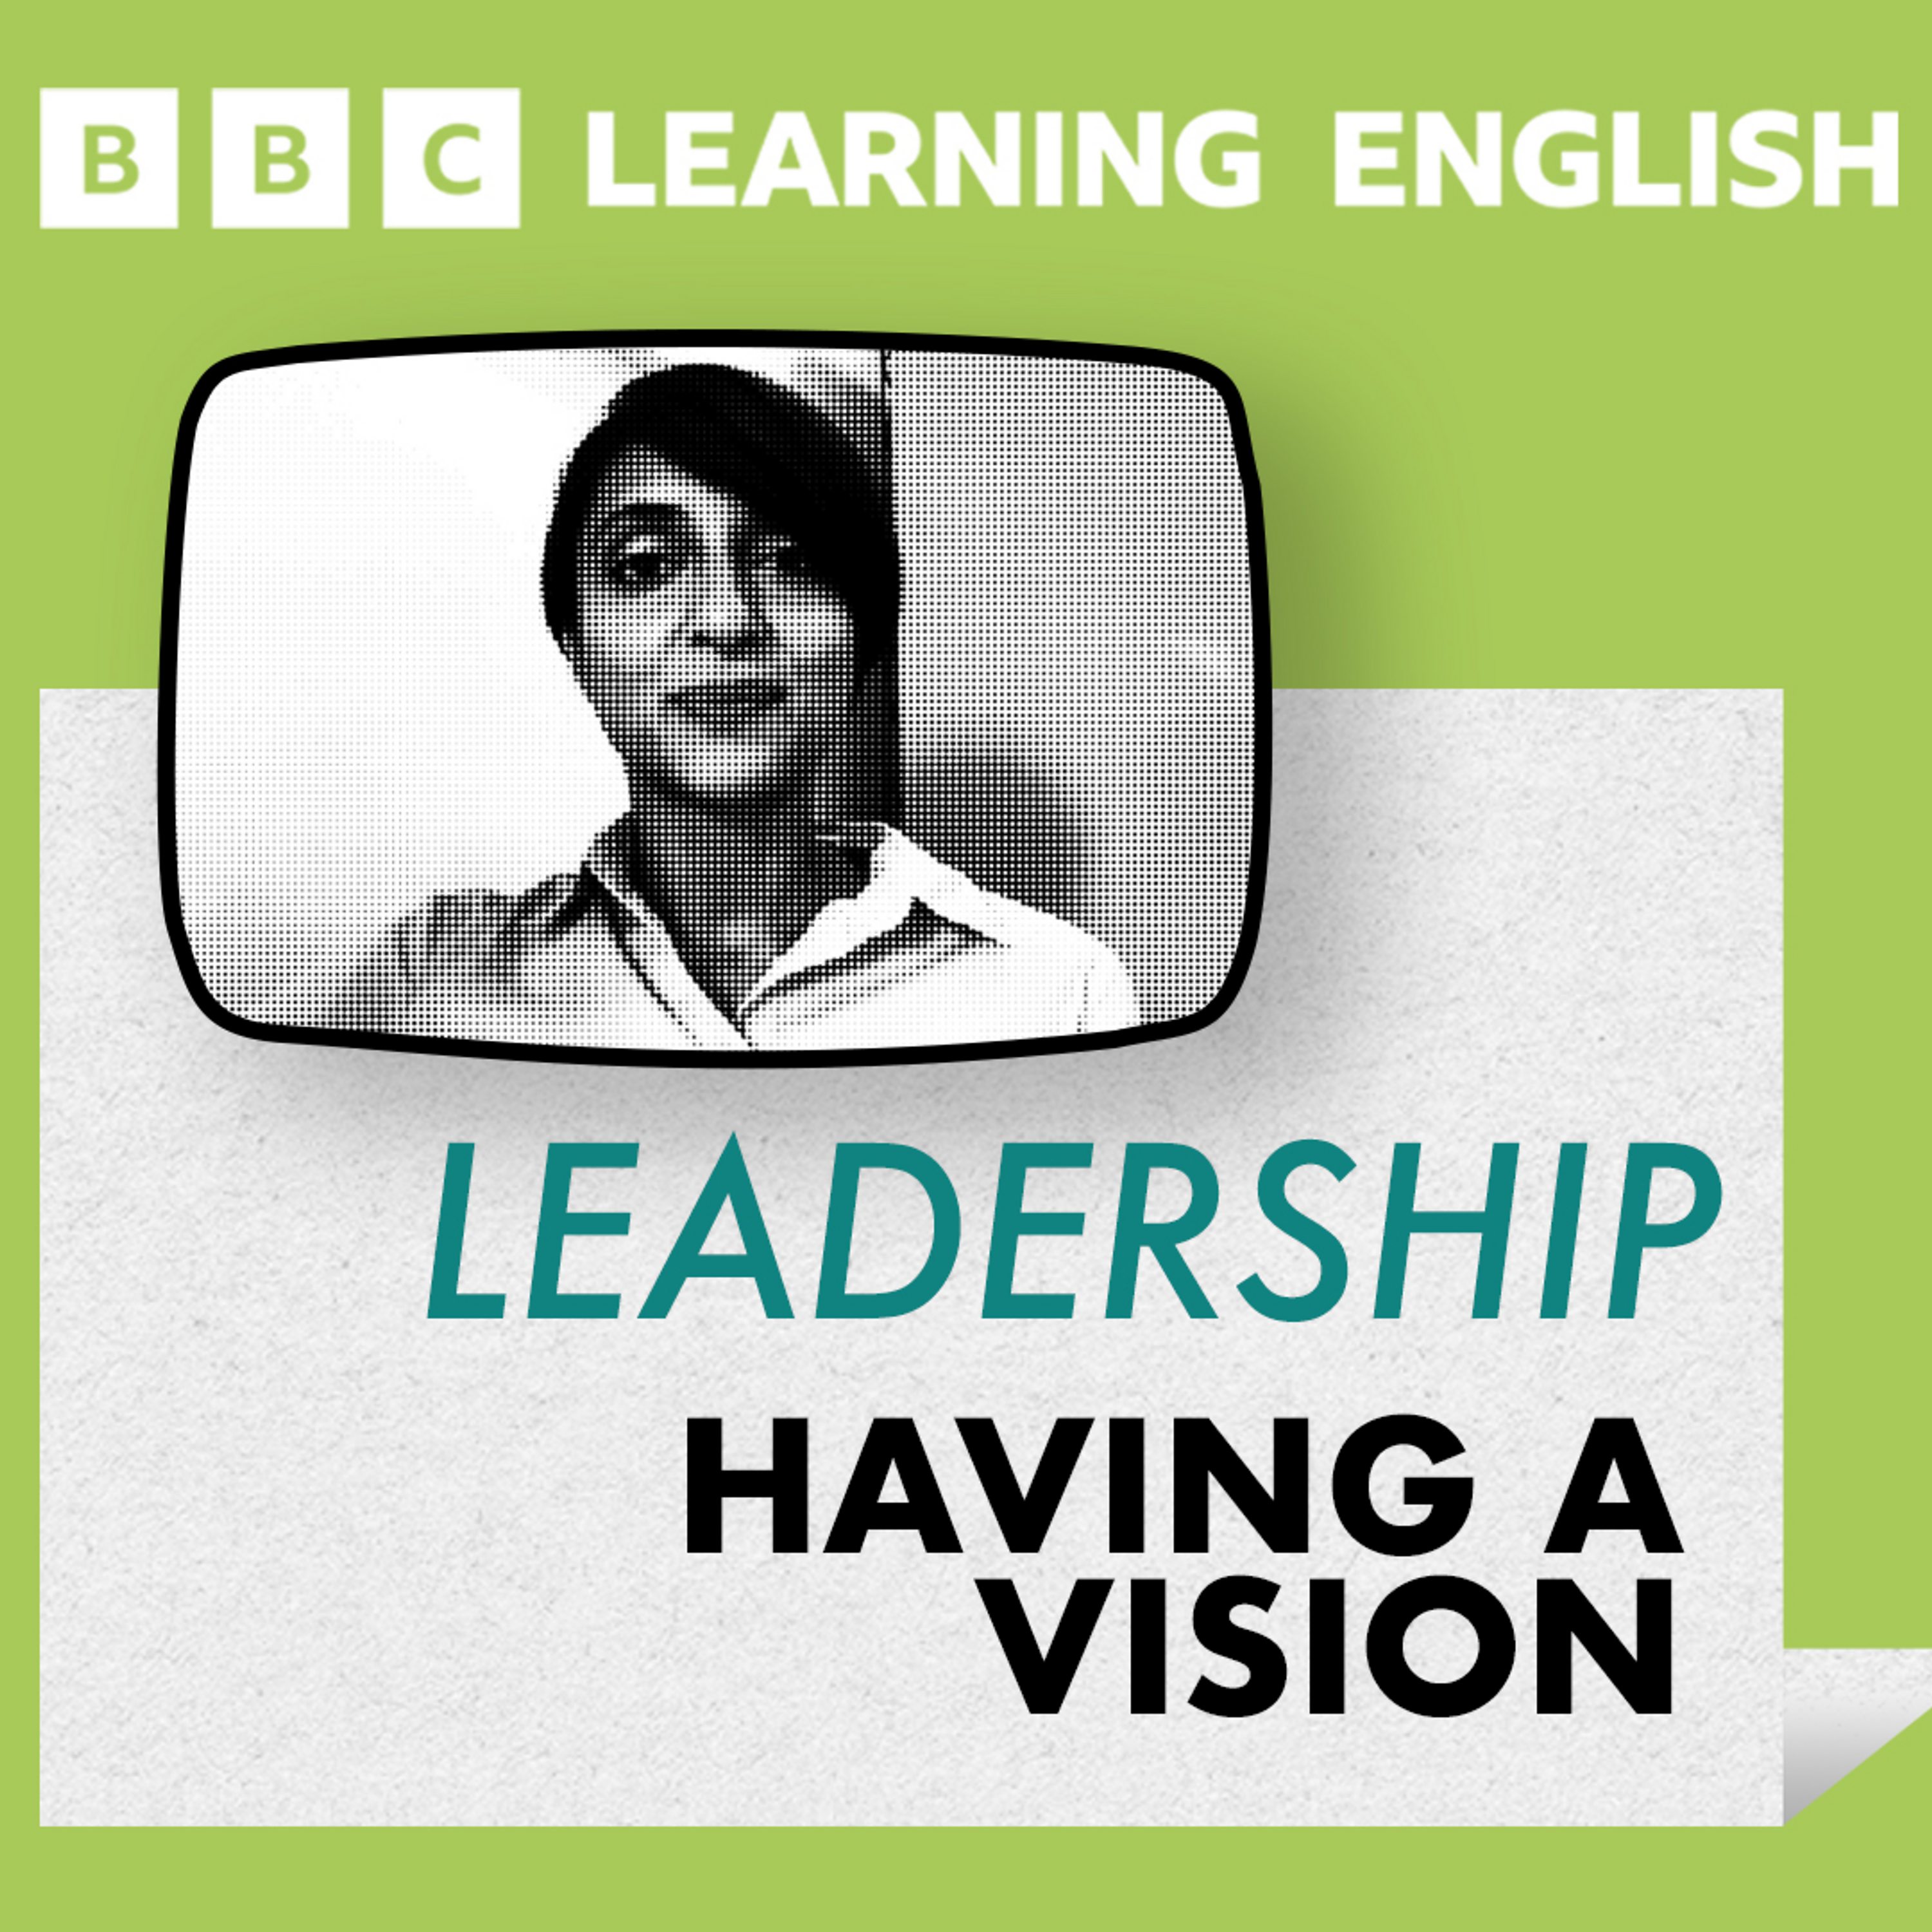 Leadership: Having a vision